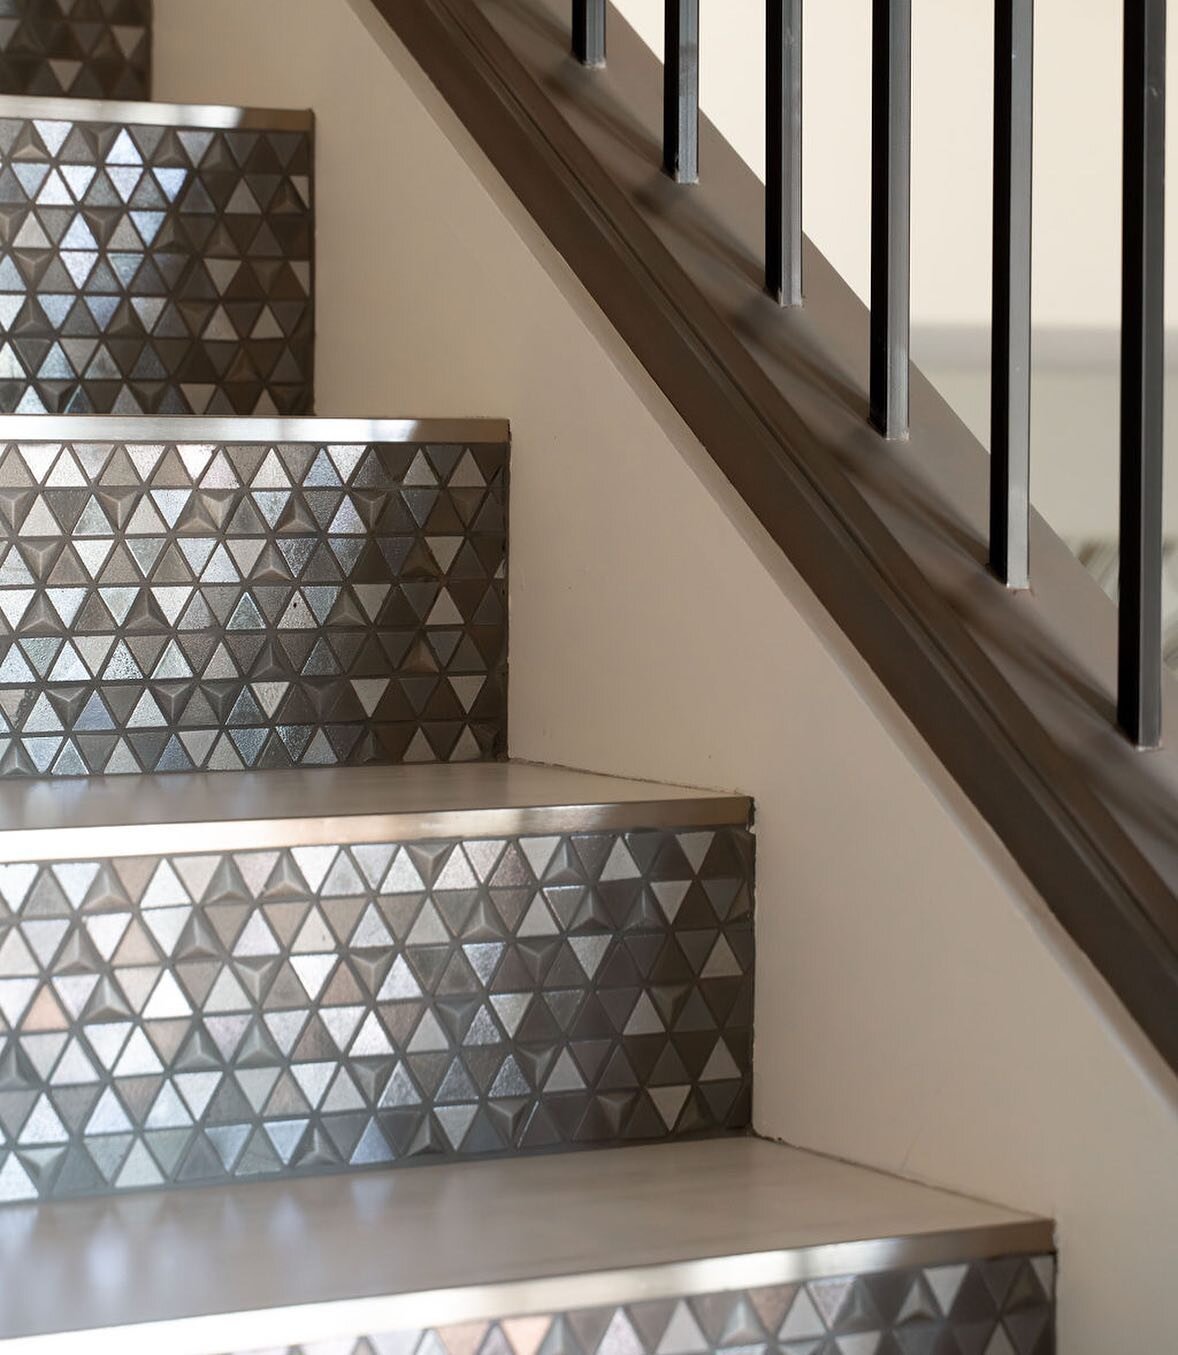 Details. Fractals. Elegance. 
LOVED tiling these stairs. 
.
.
.
.
#FuseLivingInteriors
#FLIstudio
#CasuallyHighstyle
#stairwell
#luxury
.
.
.
.
.
.
.
#homeremodel
#azhomes
#azrealtor 
#azremodel 
#myphx
#paradisevalleylifestyle
#luxuryinteriors 
#sco